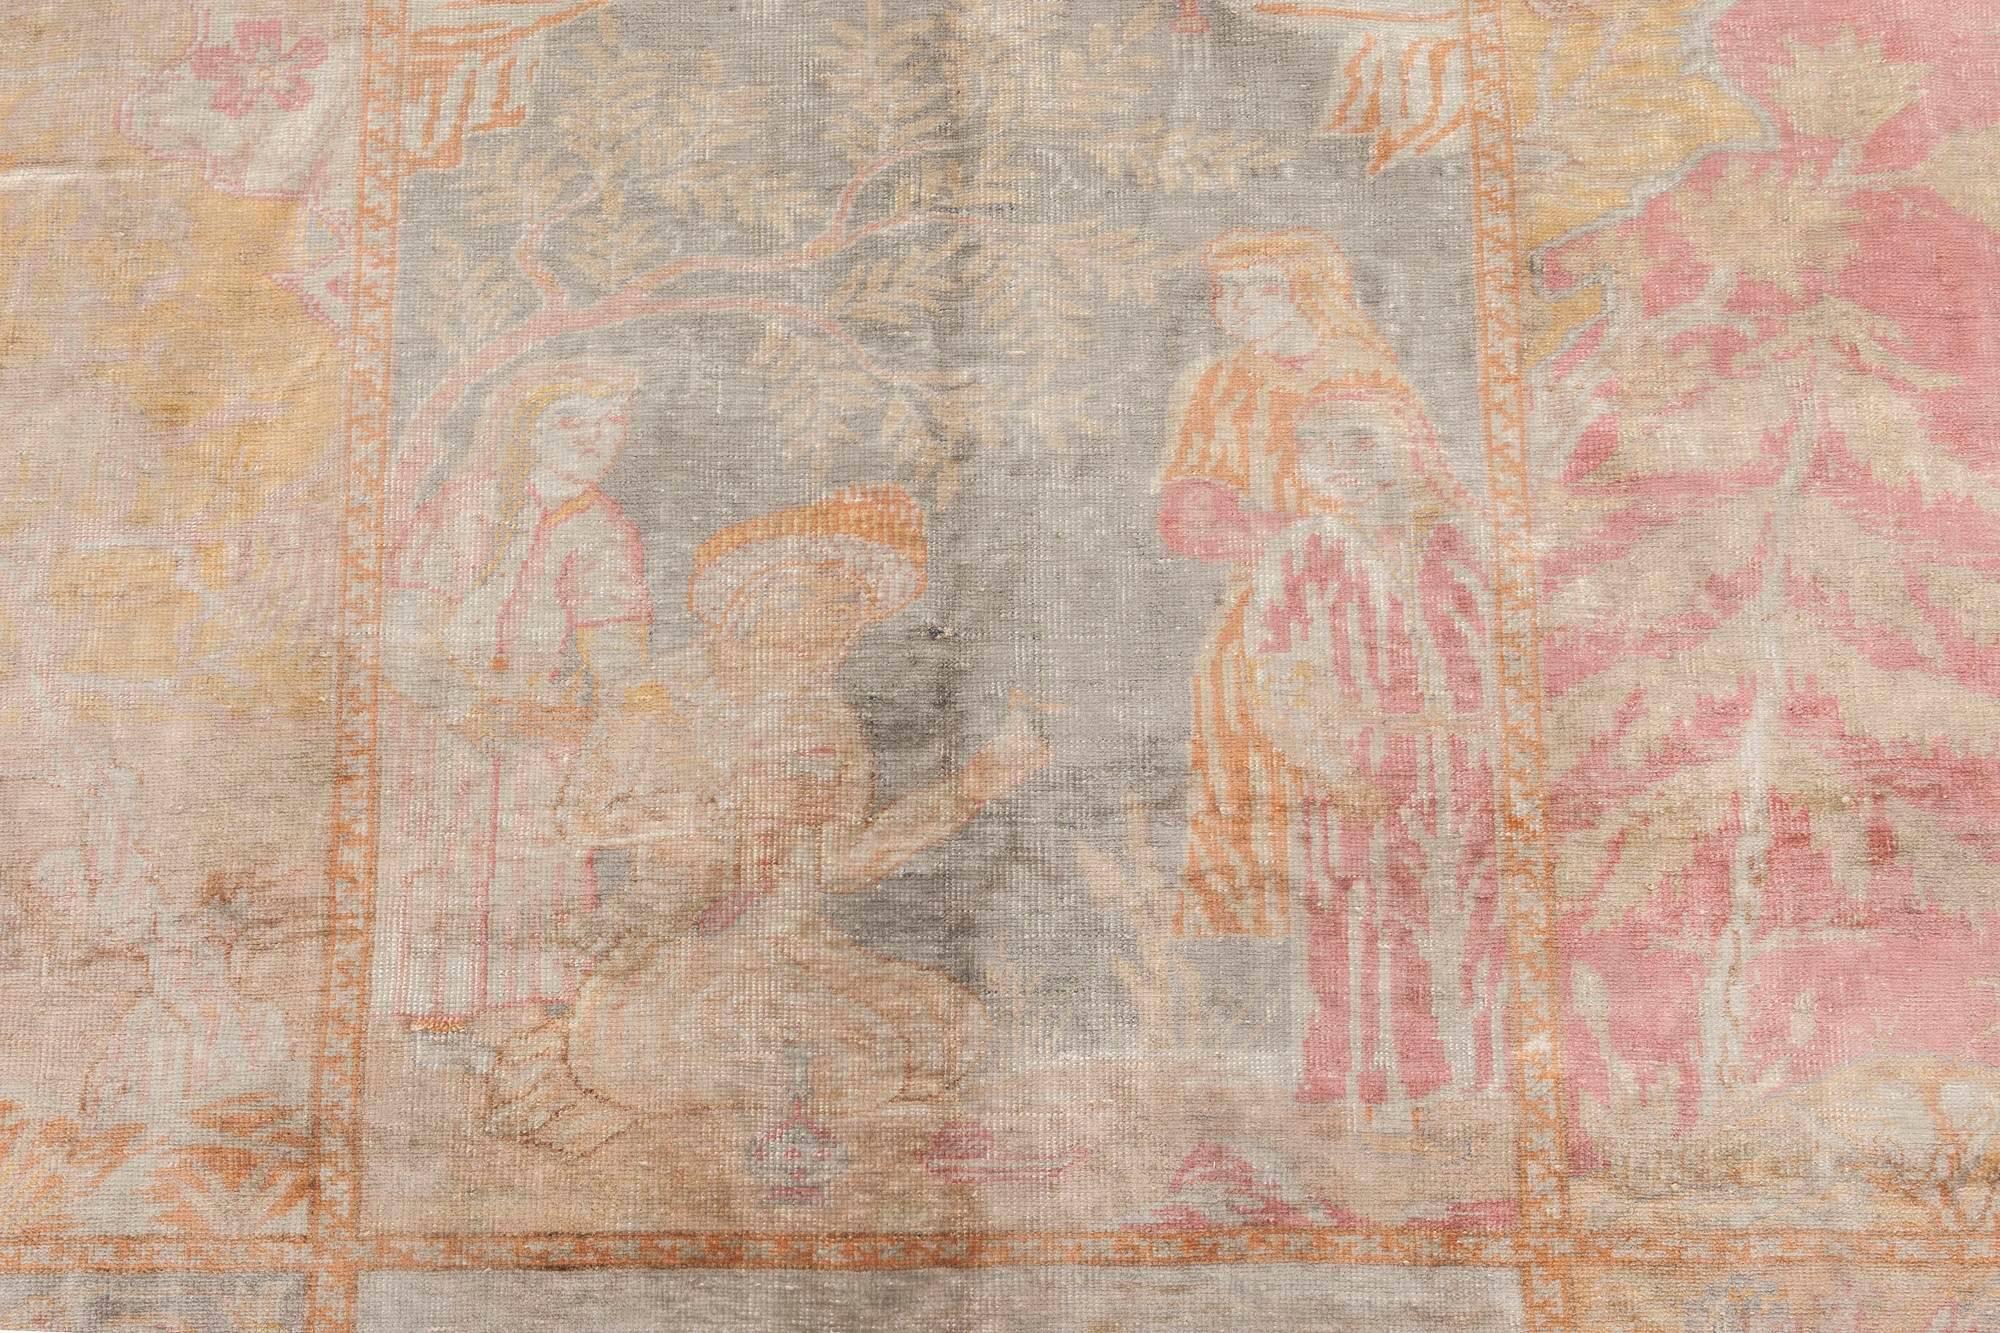 Antique silk Hereke rug
Size: 6'7